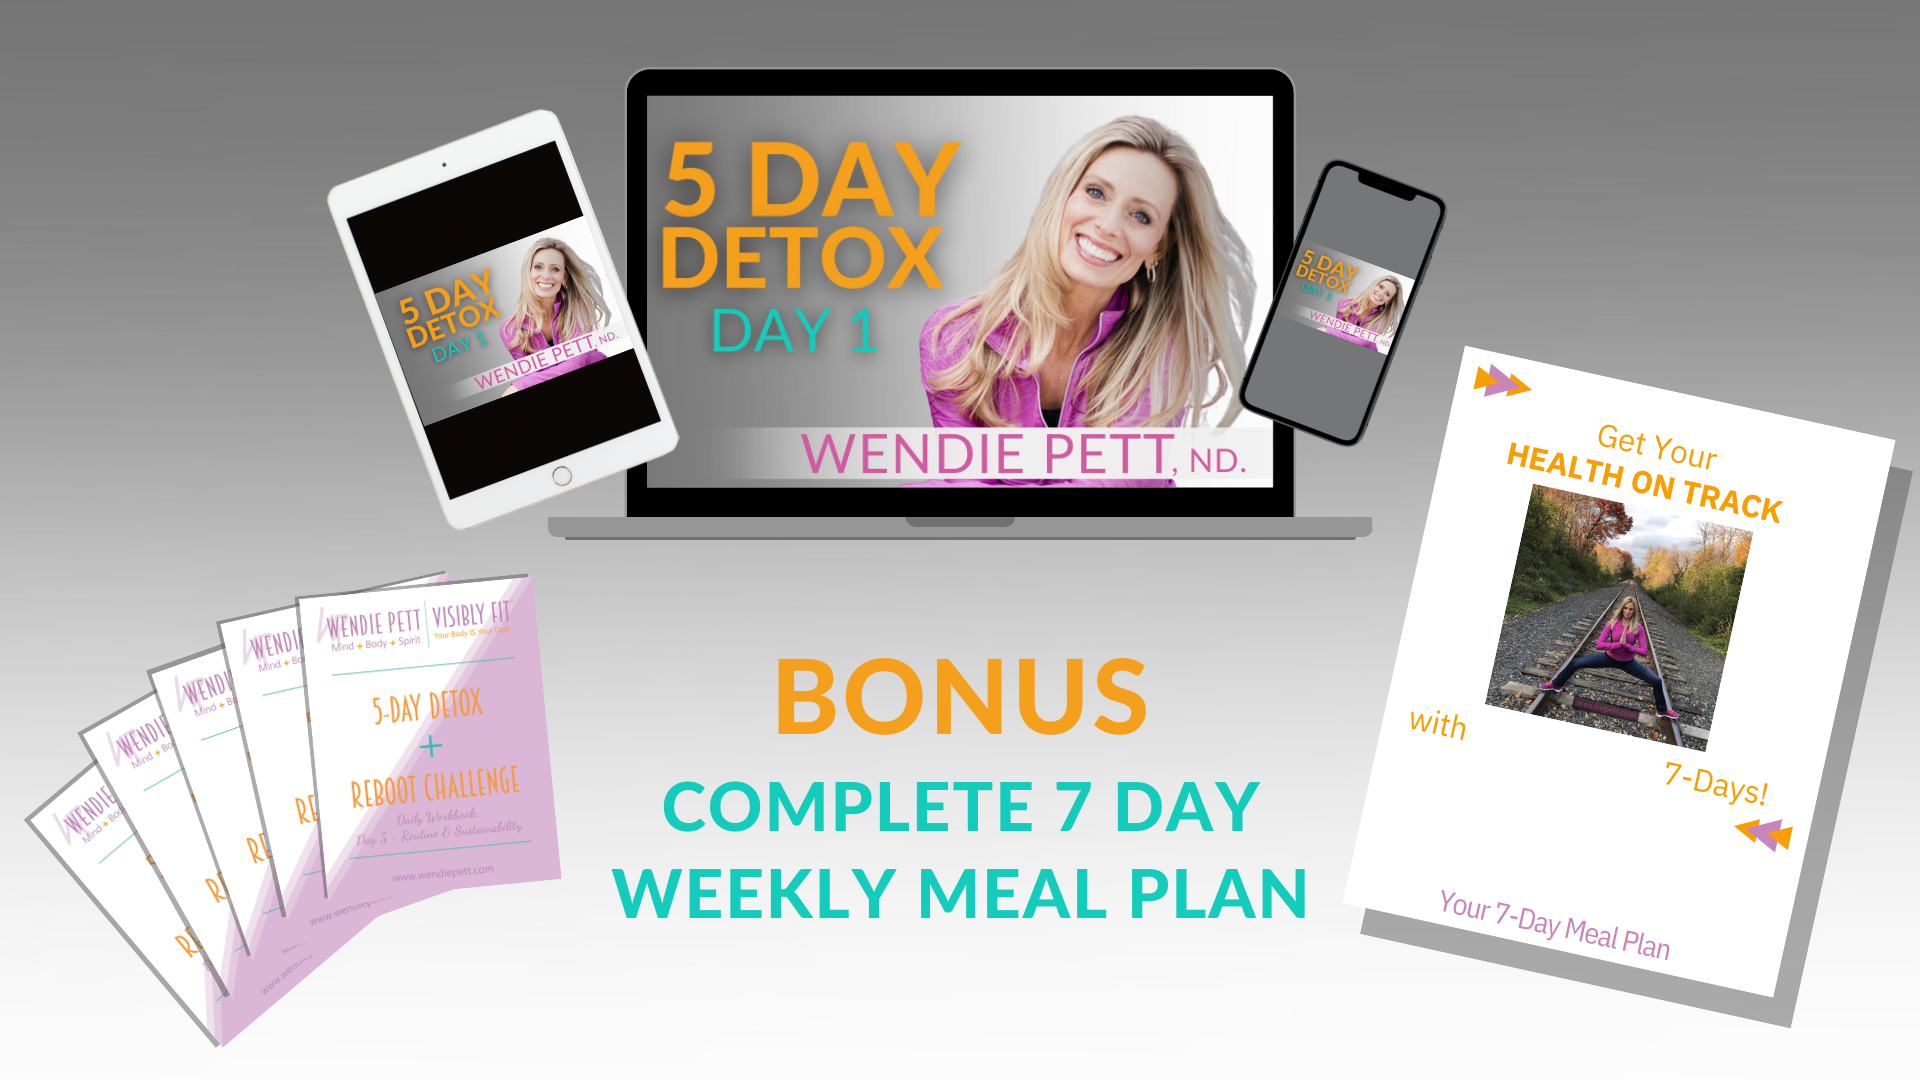 BONUS Complete 7 Day Weekly Meal Plan as part of the 5 Day Detox + Reboot with Wendie Pett